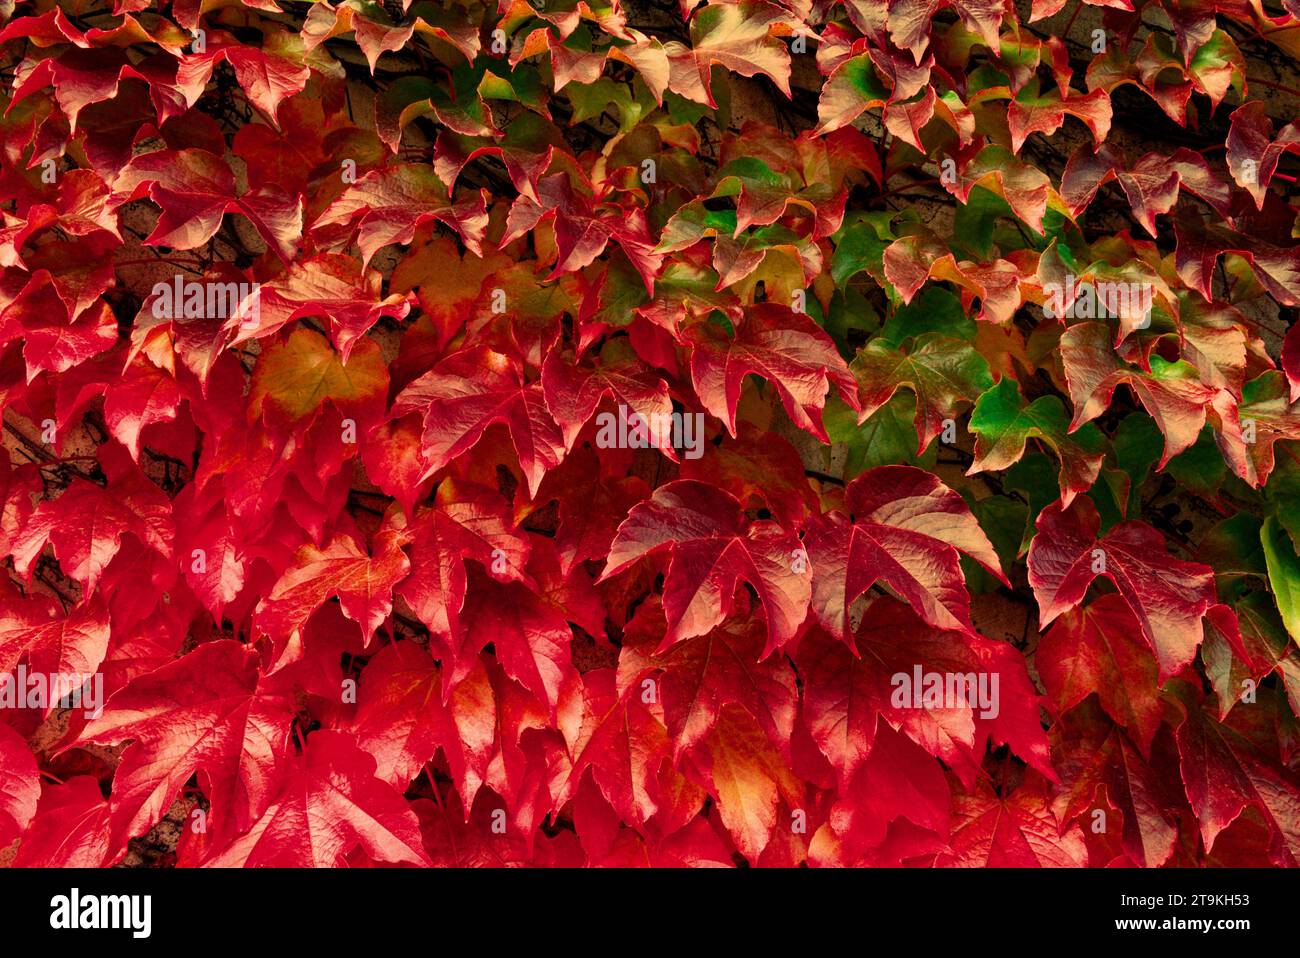 Una parete densamente ricca di foglie rosse, arancioni e verdi sovrapposte. Foto Stock